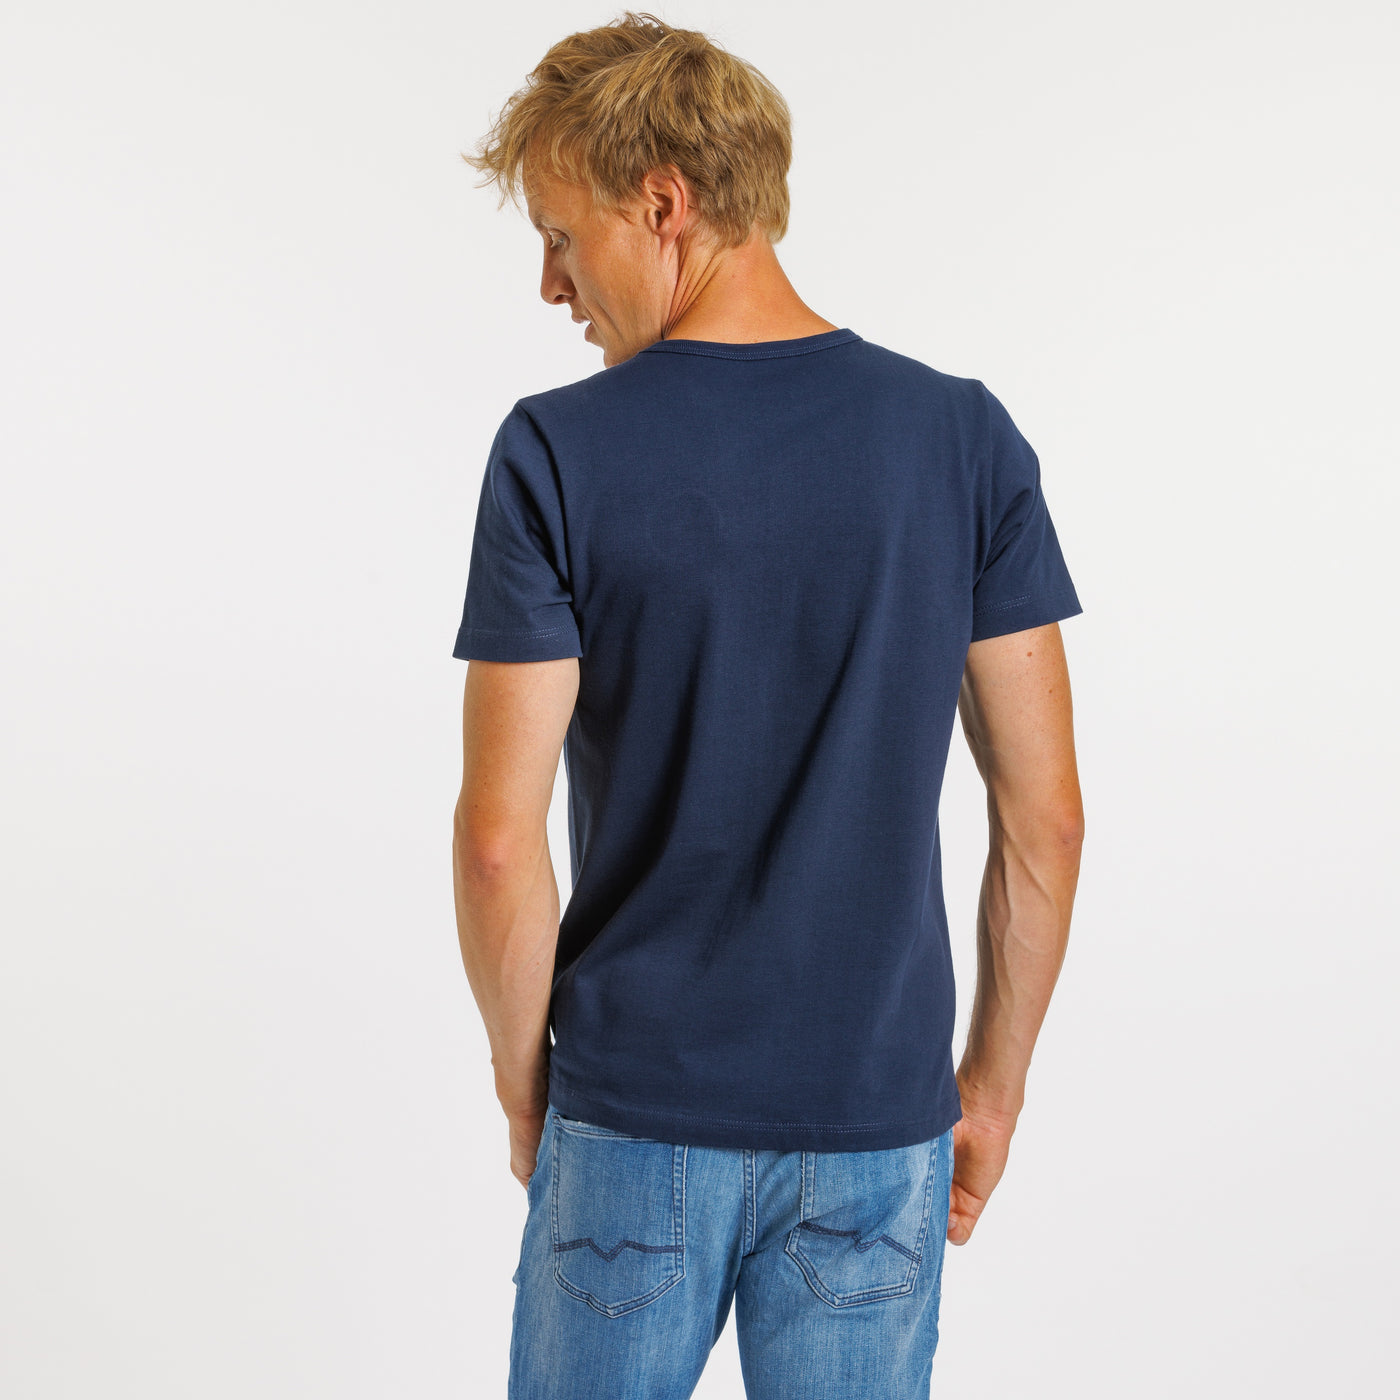 Herren T-Shirt - S-Design, side